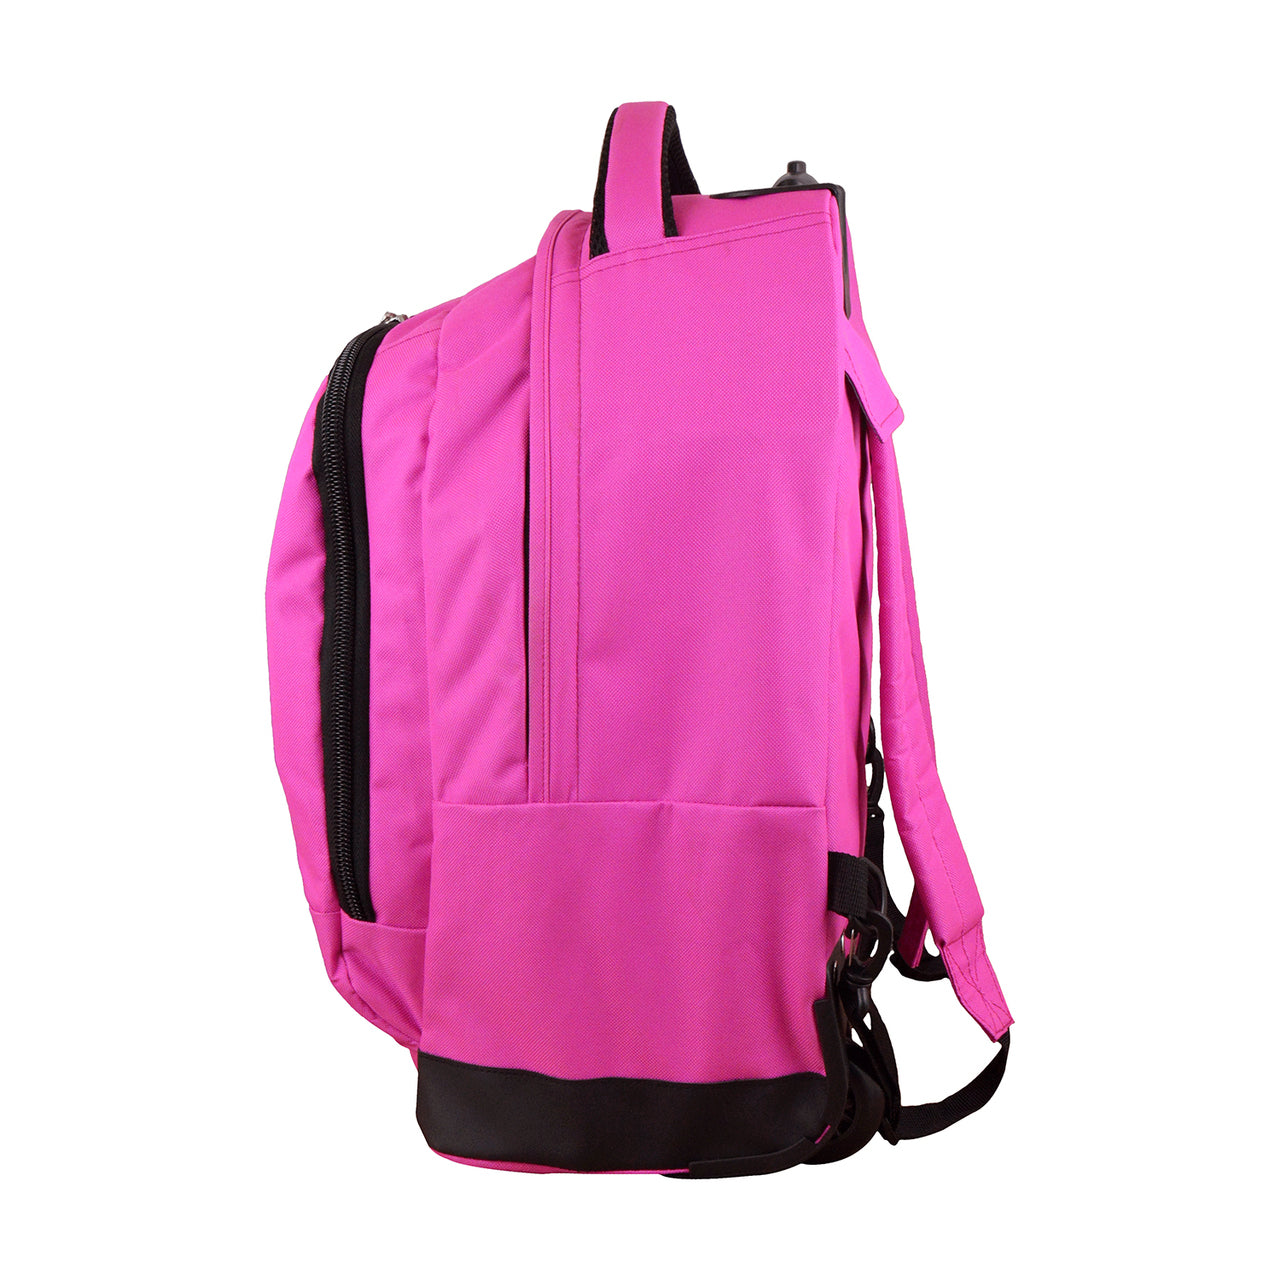 San Francisco Giants Premium Wheeled Backpack in Pink